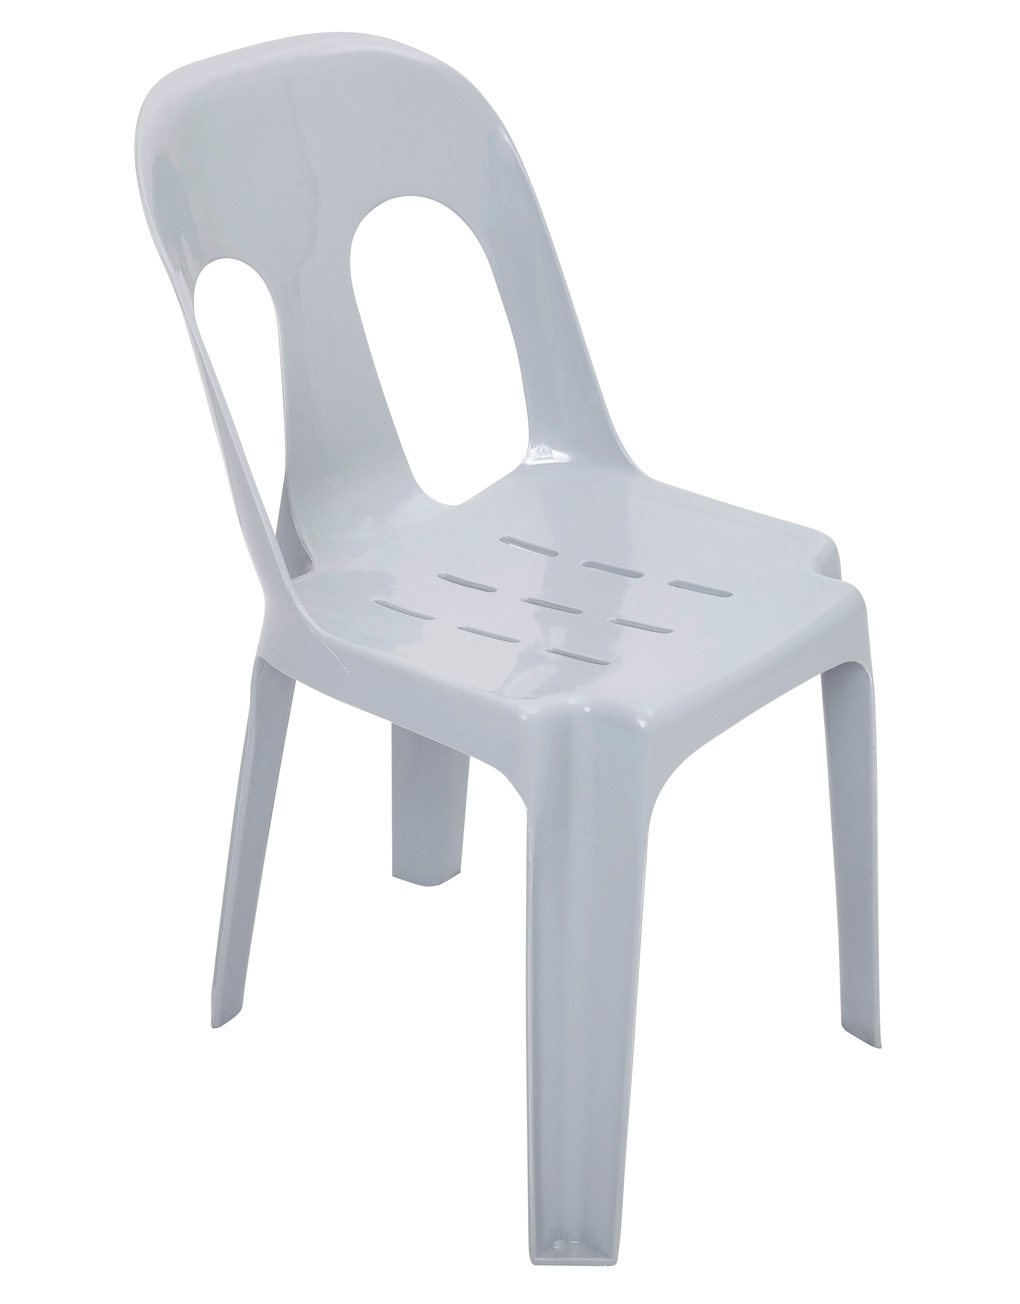 PIPEE-grey-chair-benchmark